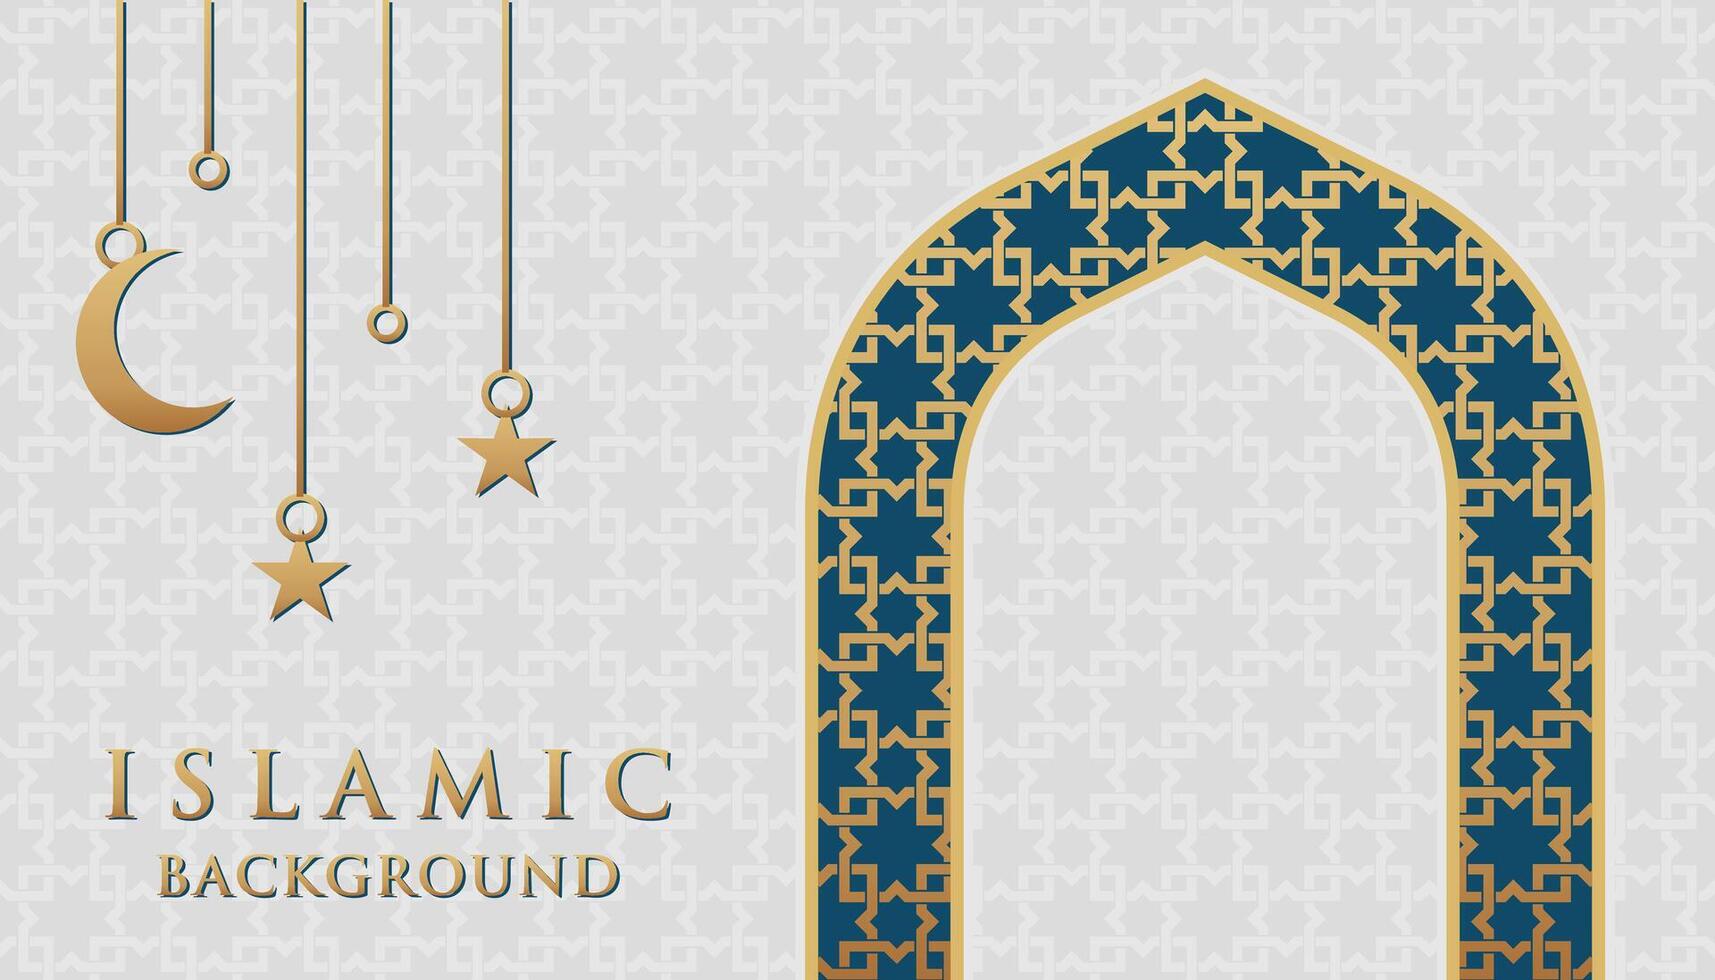 islamic arabicum abstrakt elegant blå bakgrund med gyllene lyx gräns ram vektor